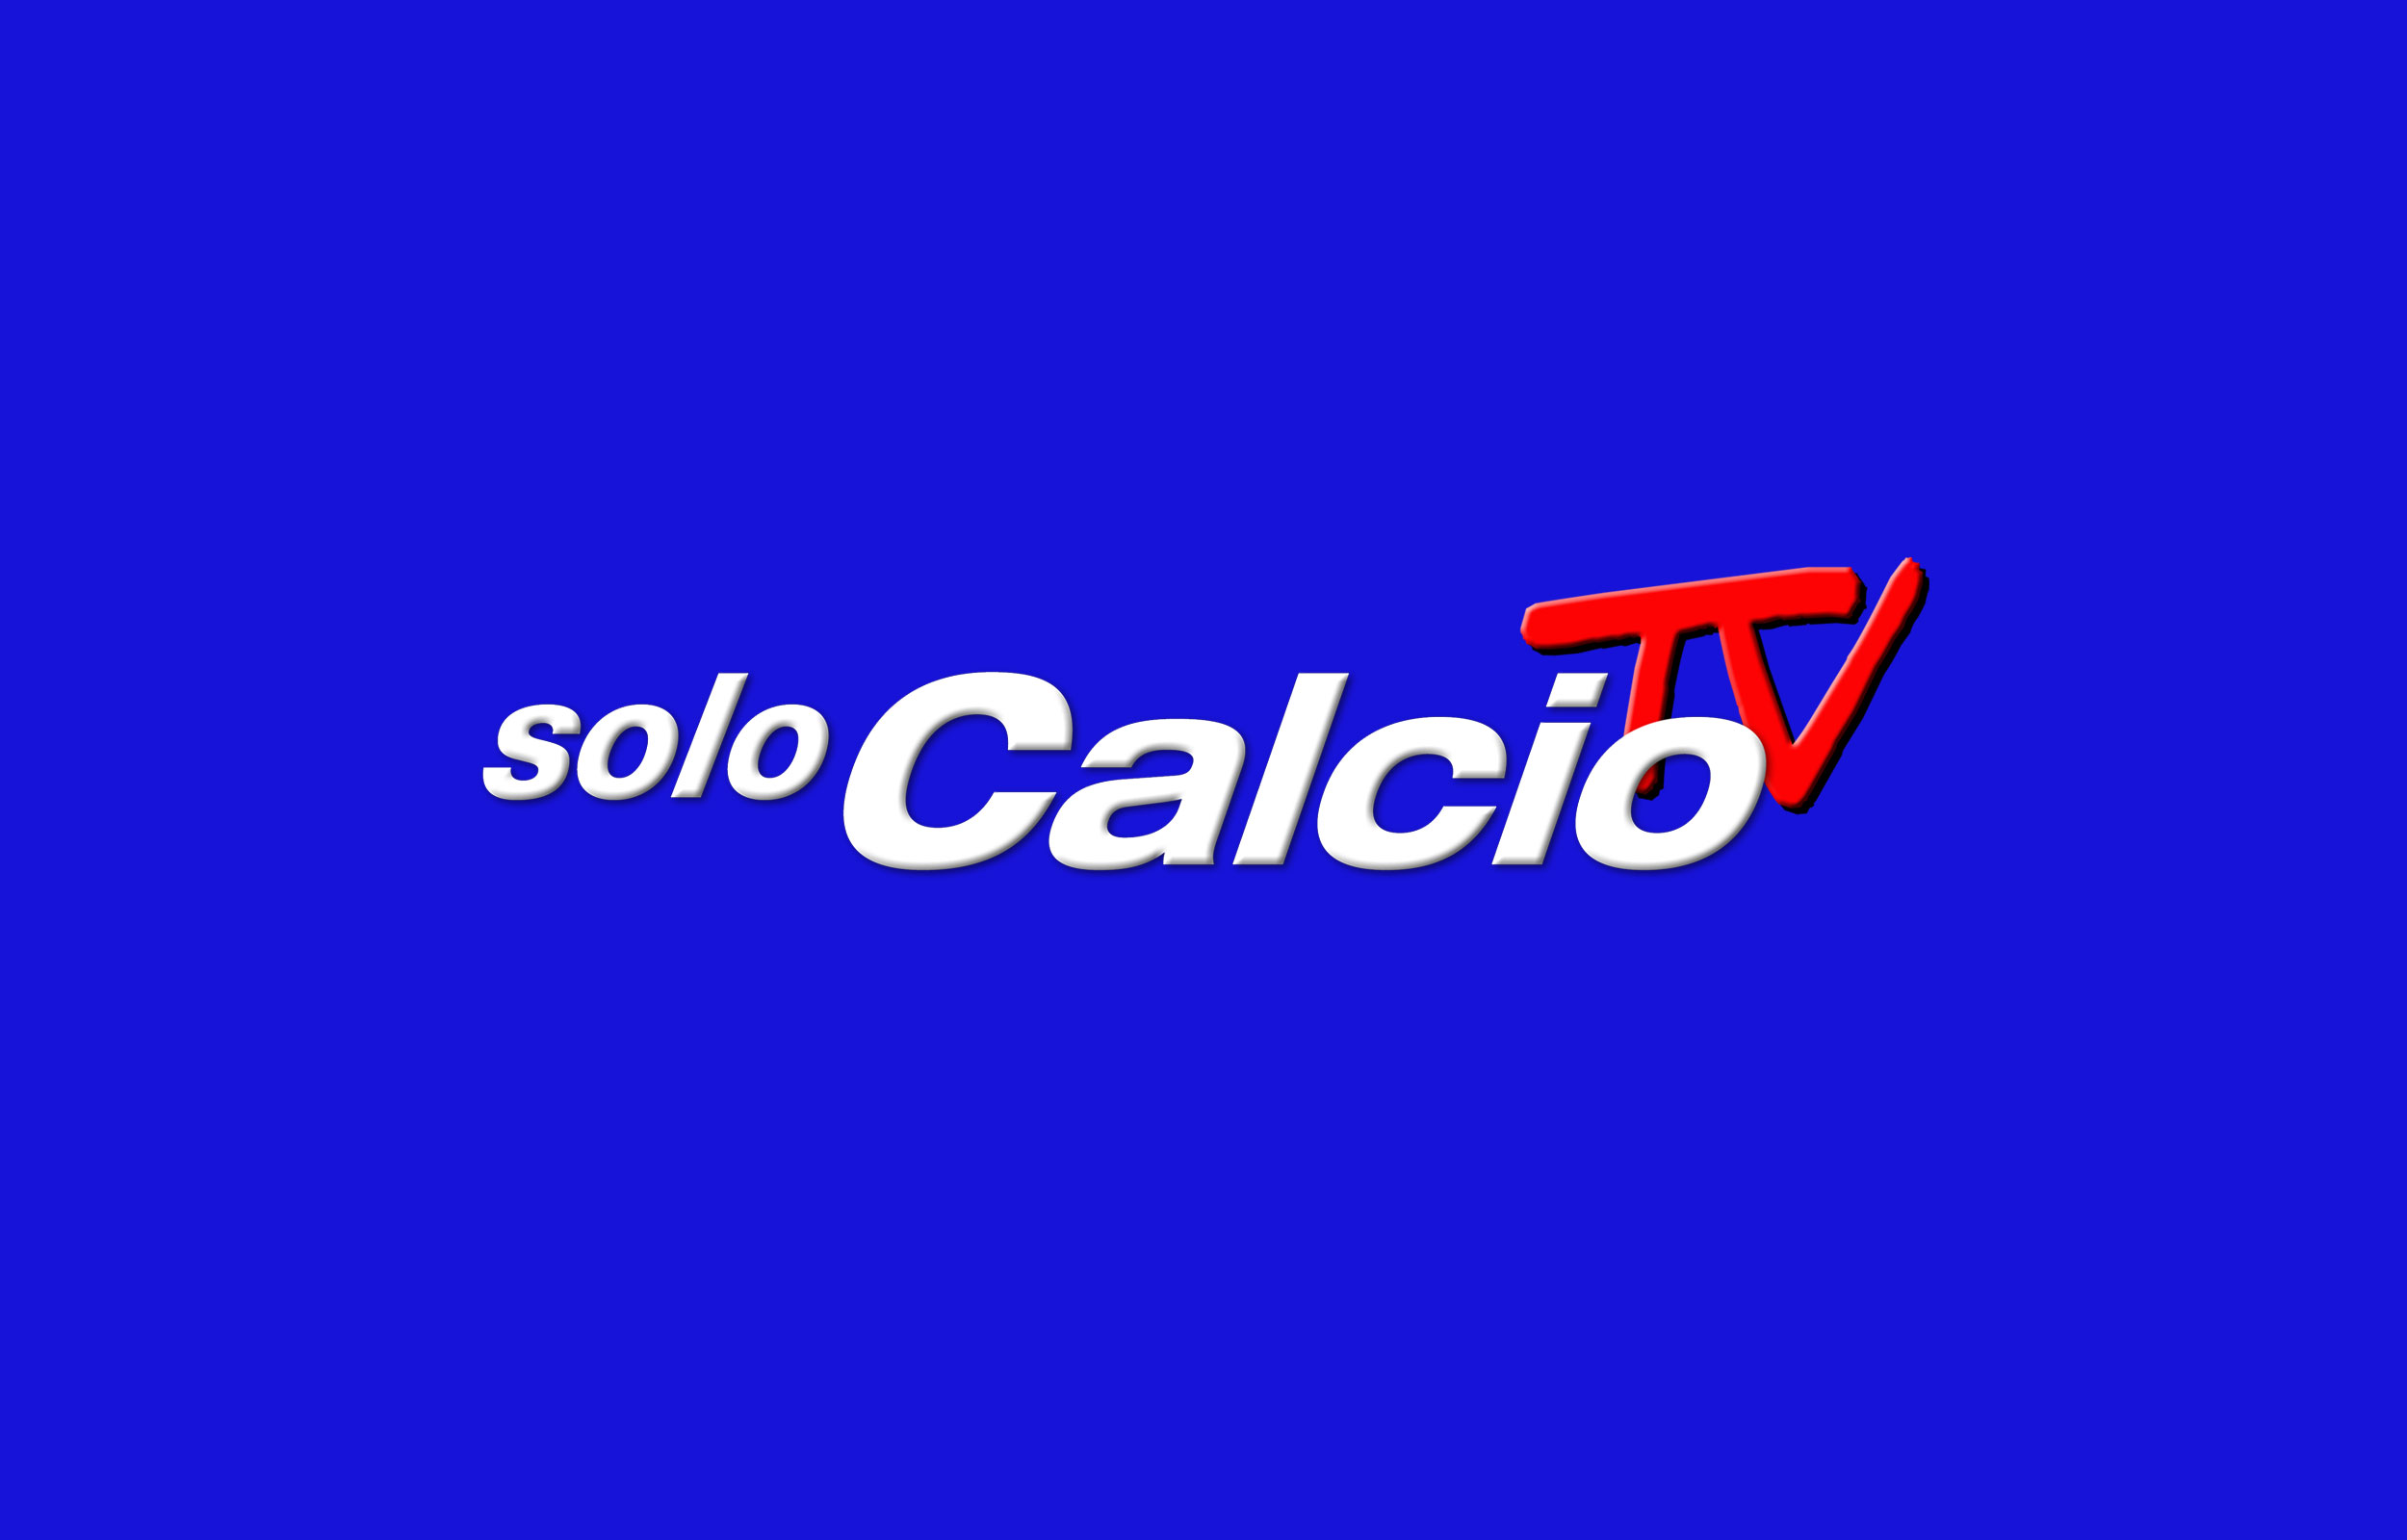 Solocalcio TV